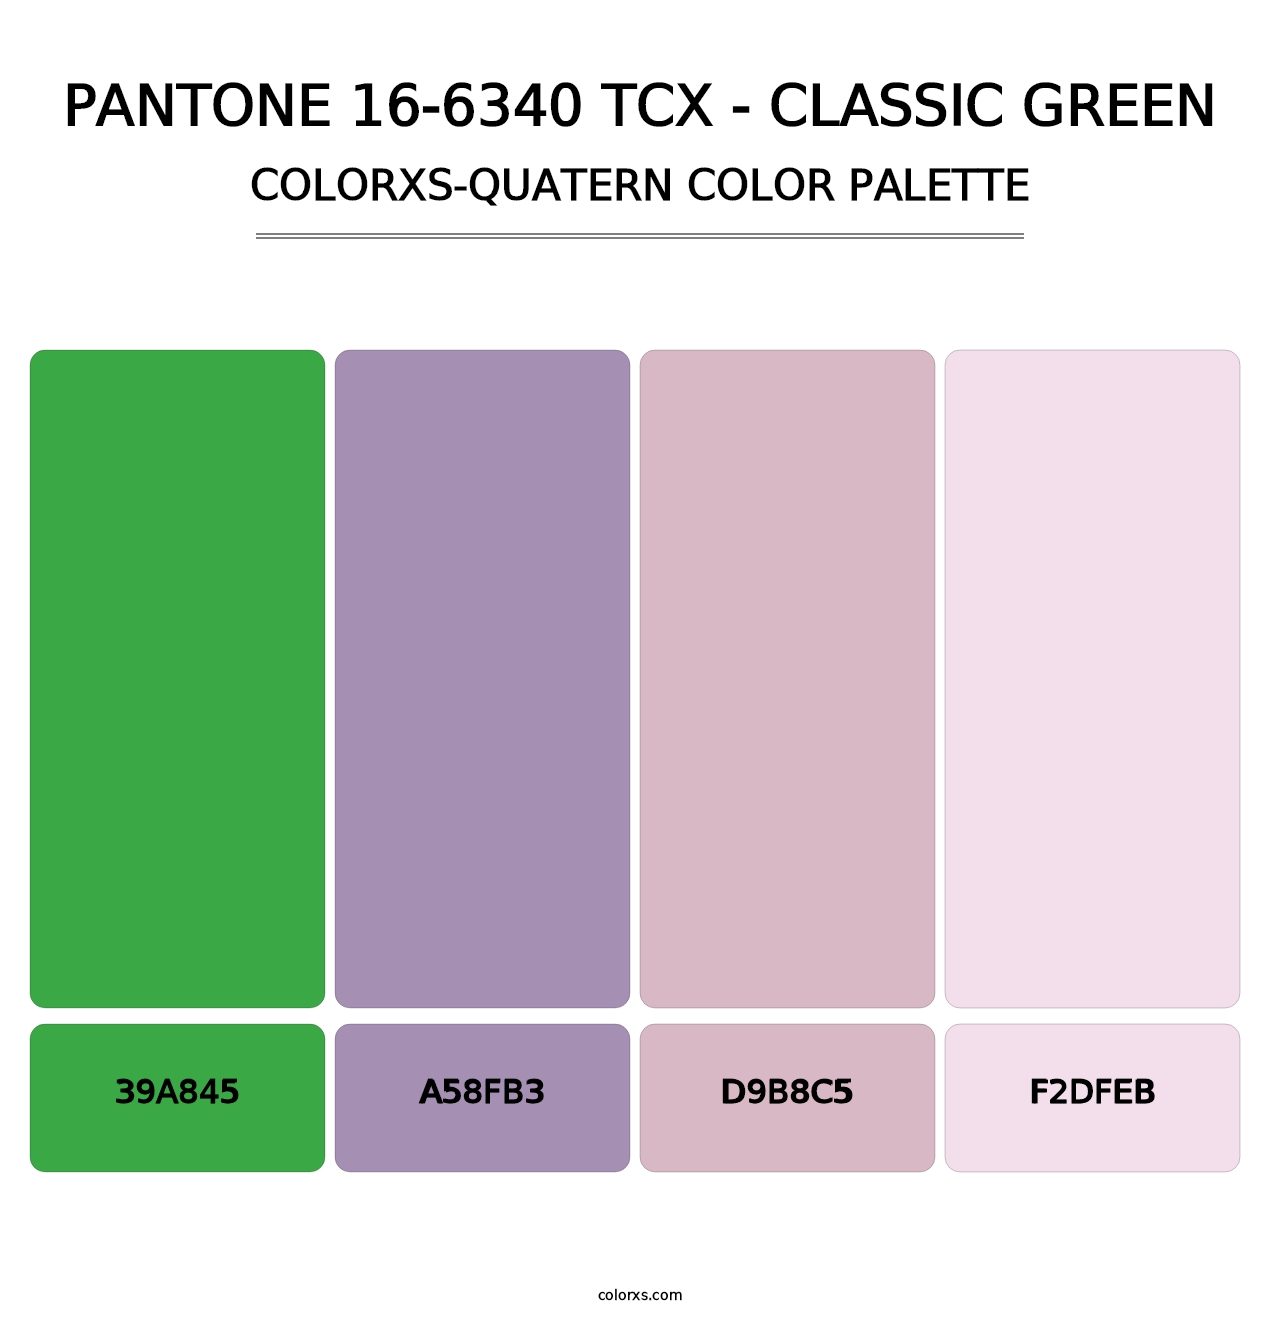 PANTONE 16-6340 TCX - Classic Green - Colorxs Quatern Palette